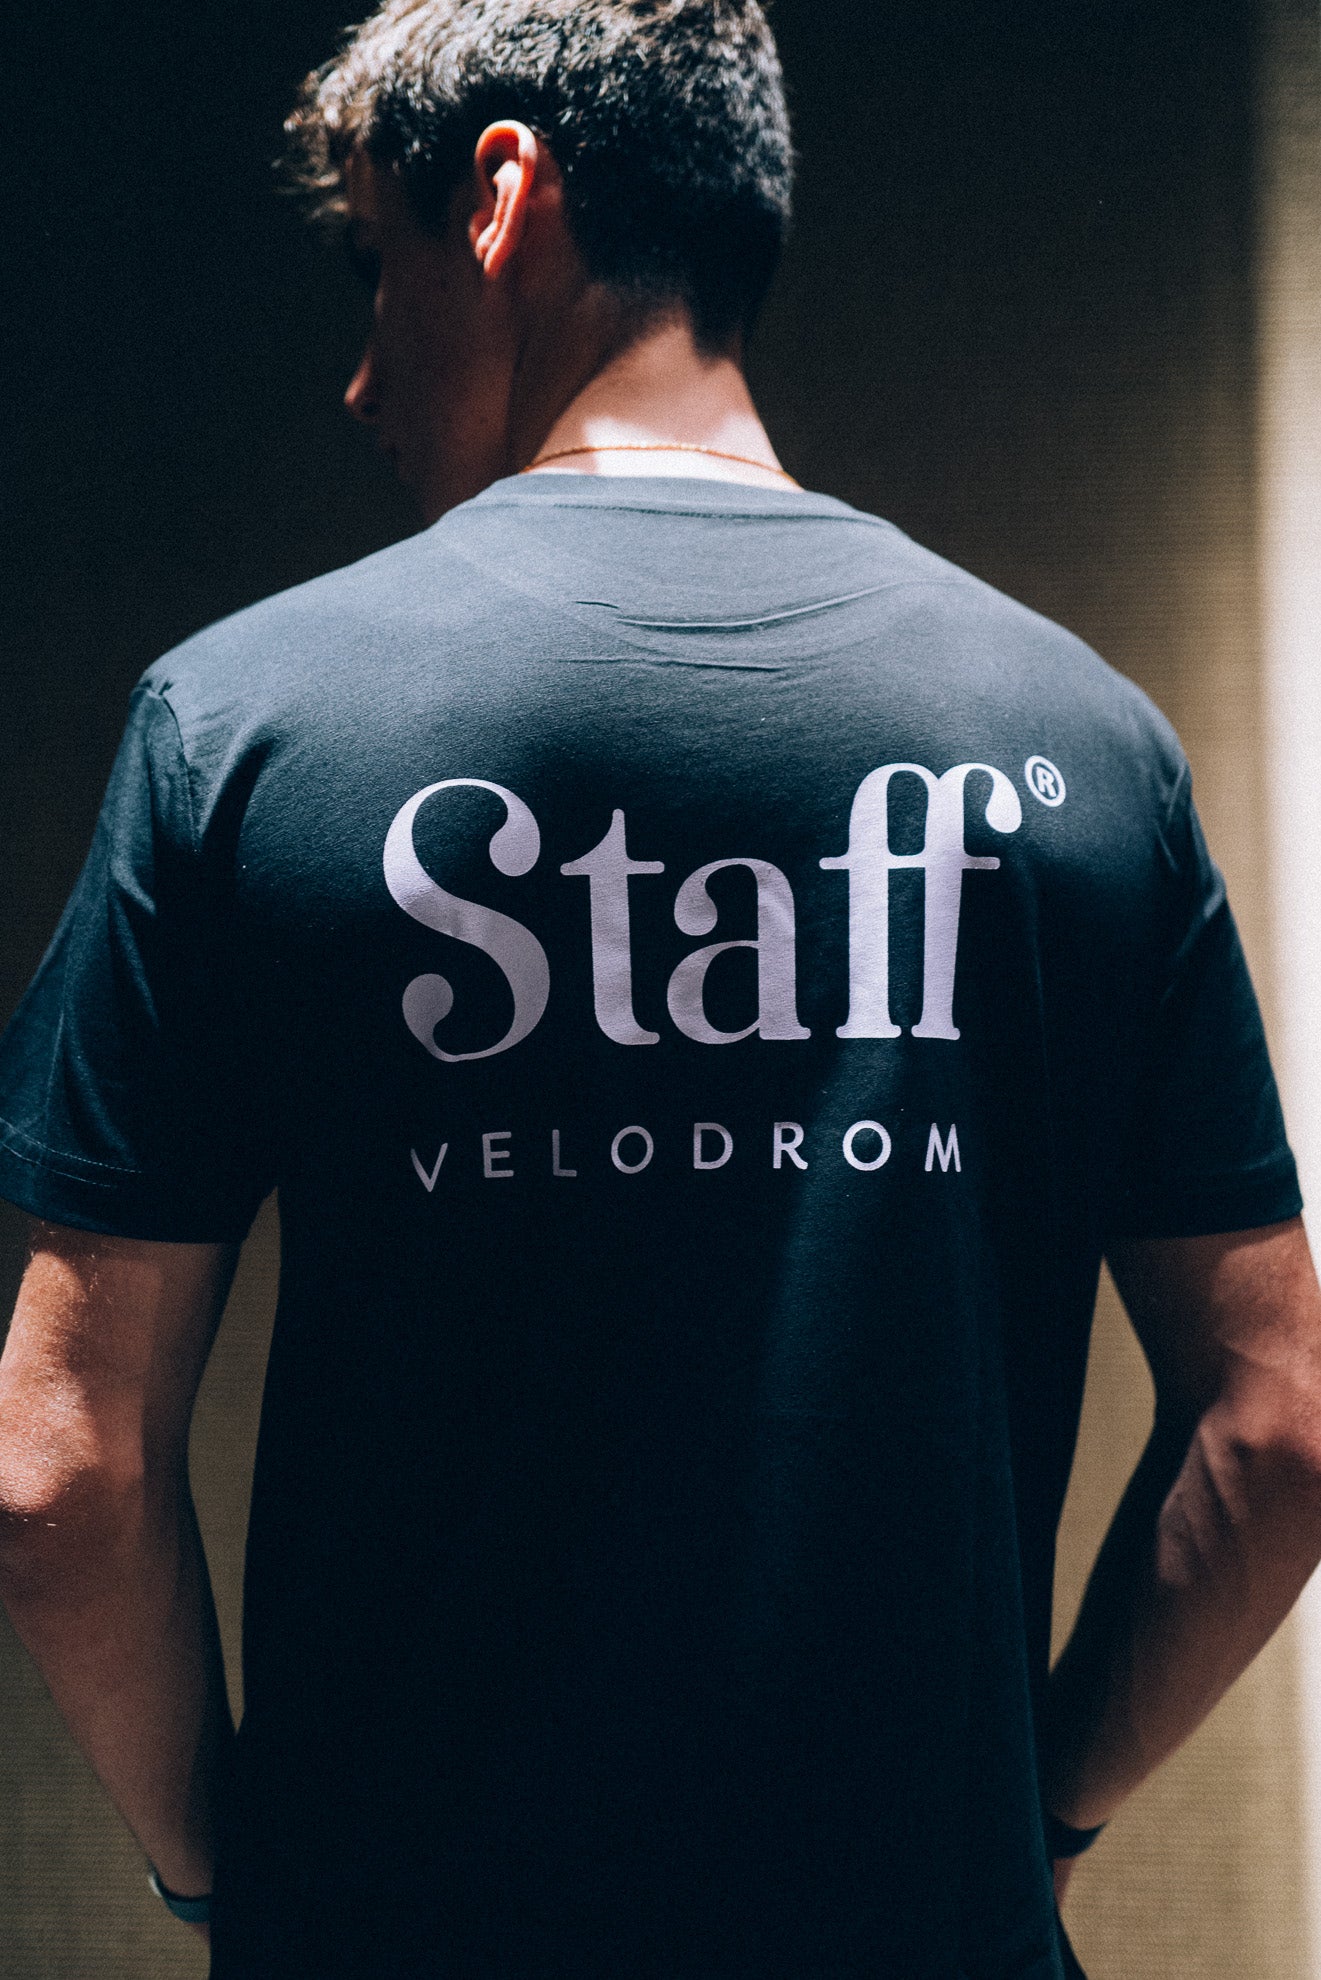 VELODROM Staff Camiseta - Black/Lavender